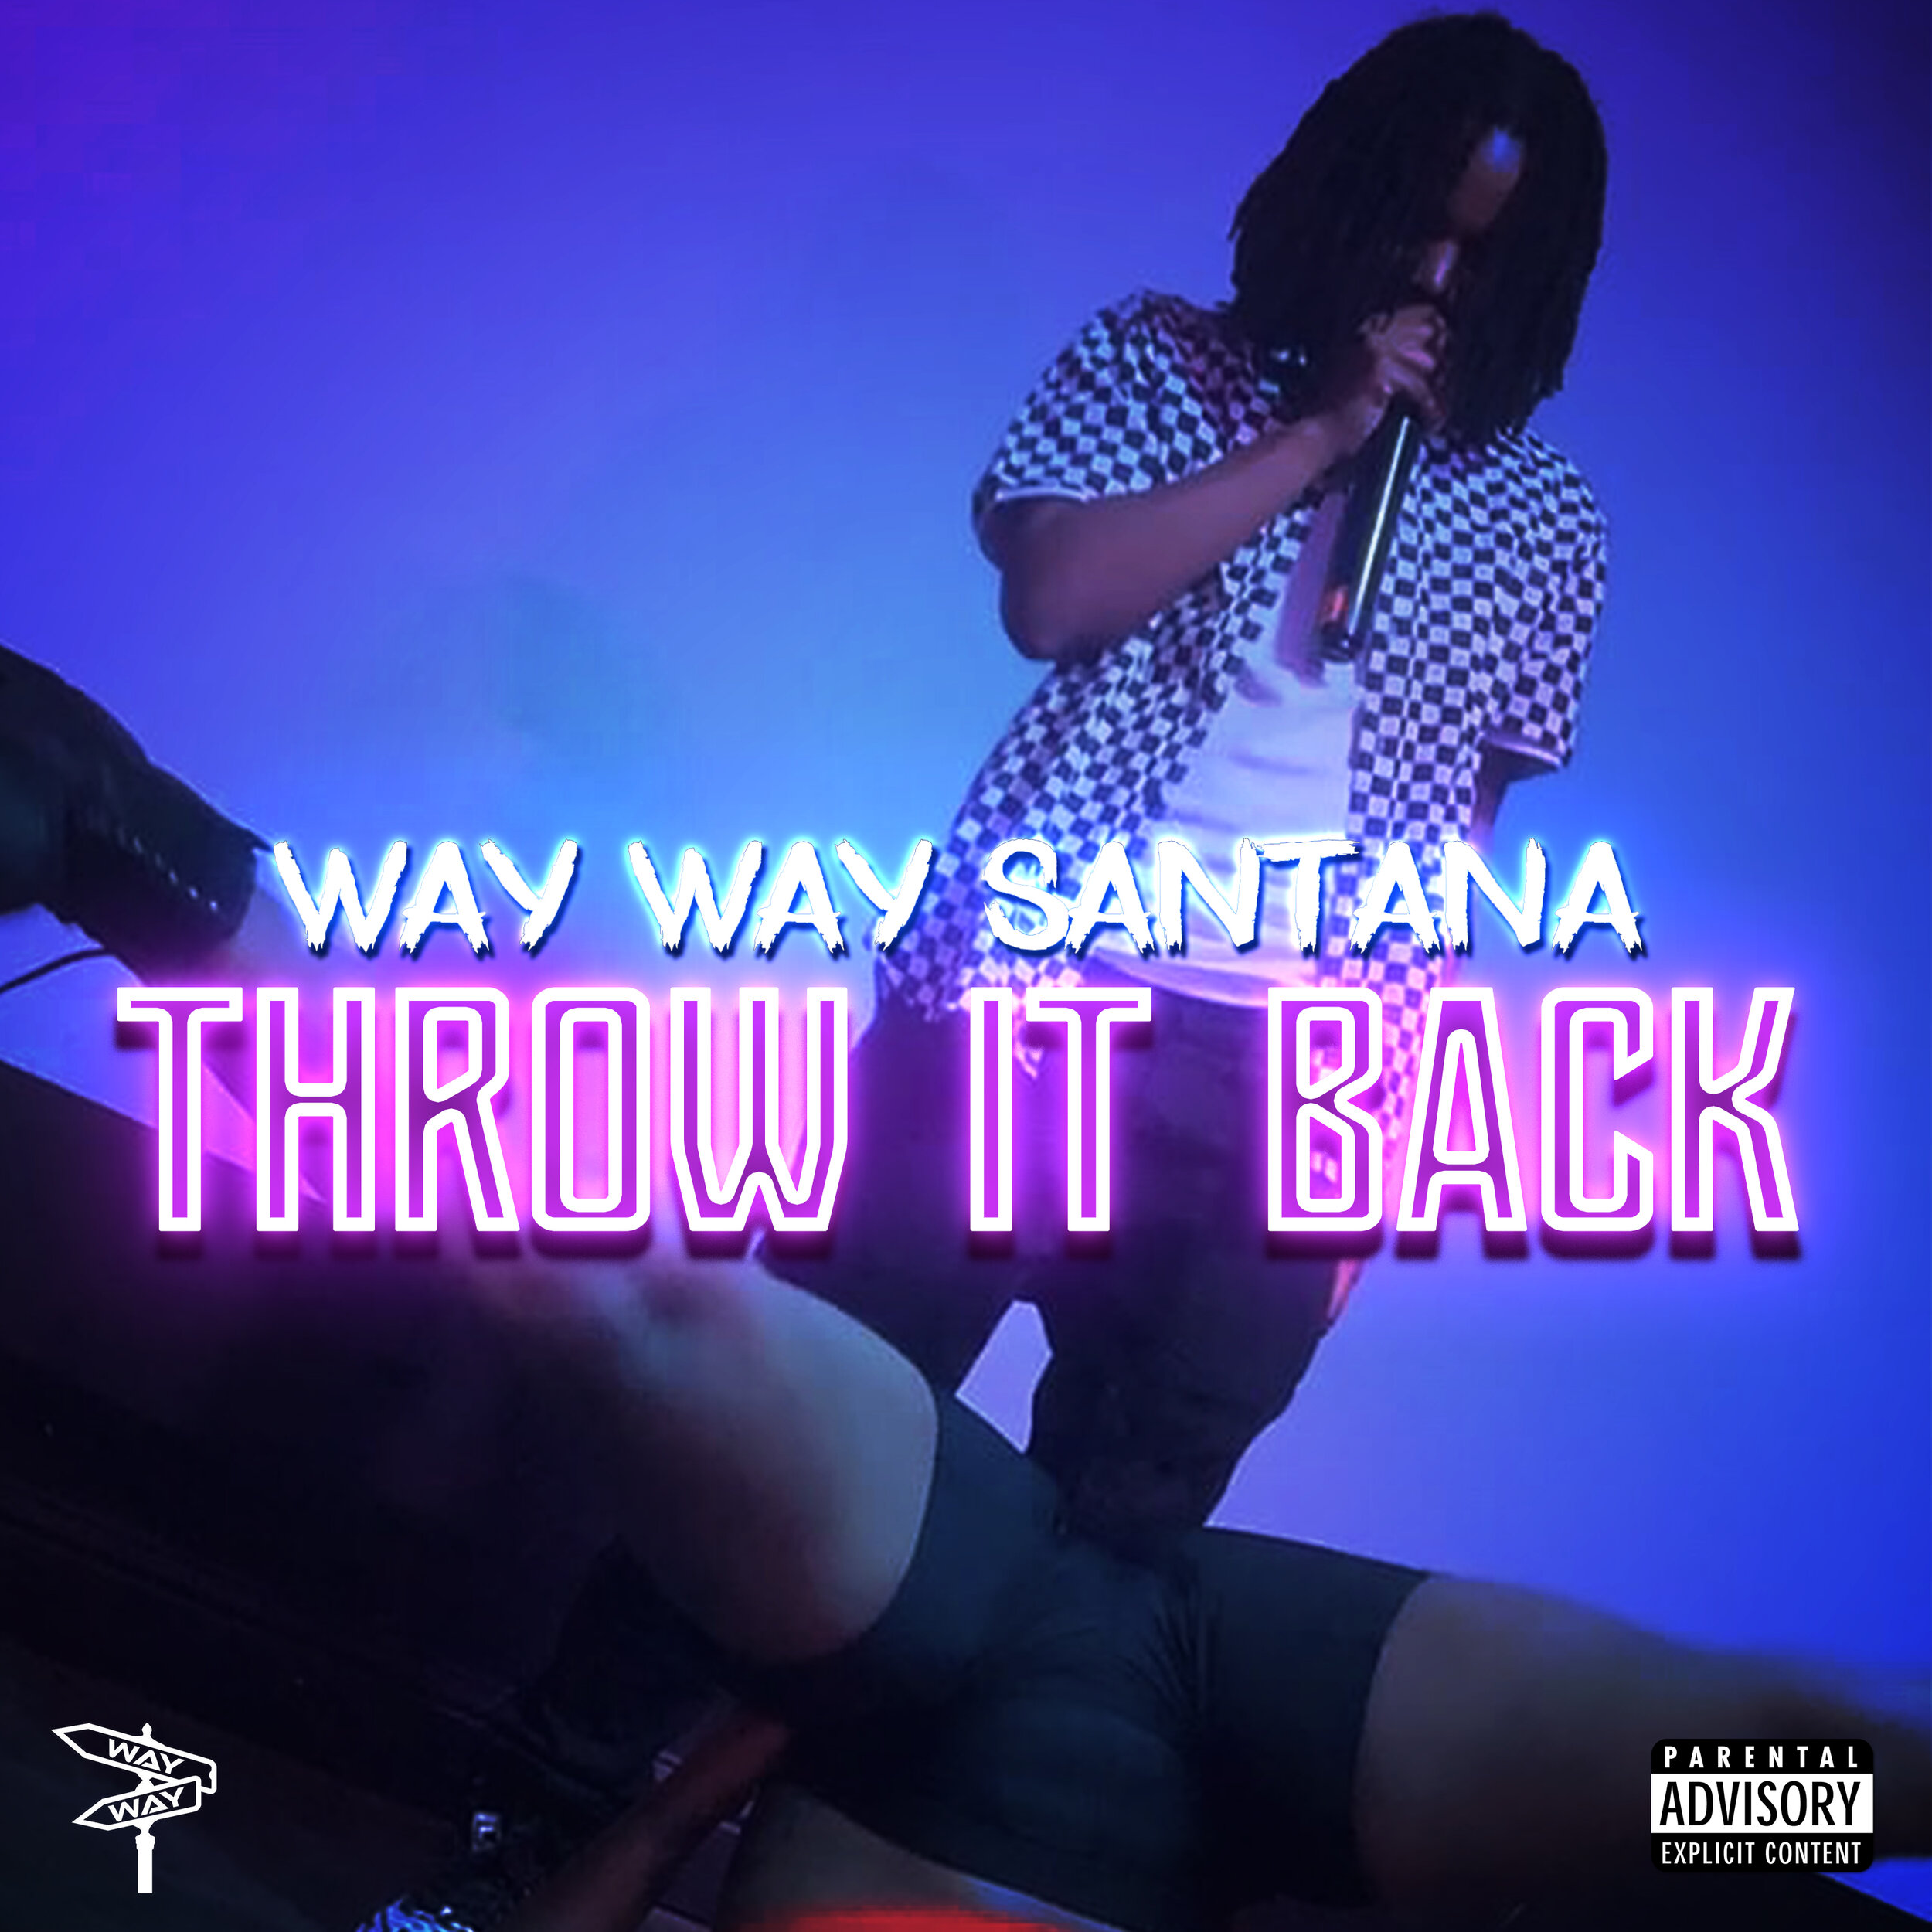 Way Way Santana "Throw It Back"